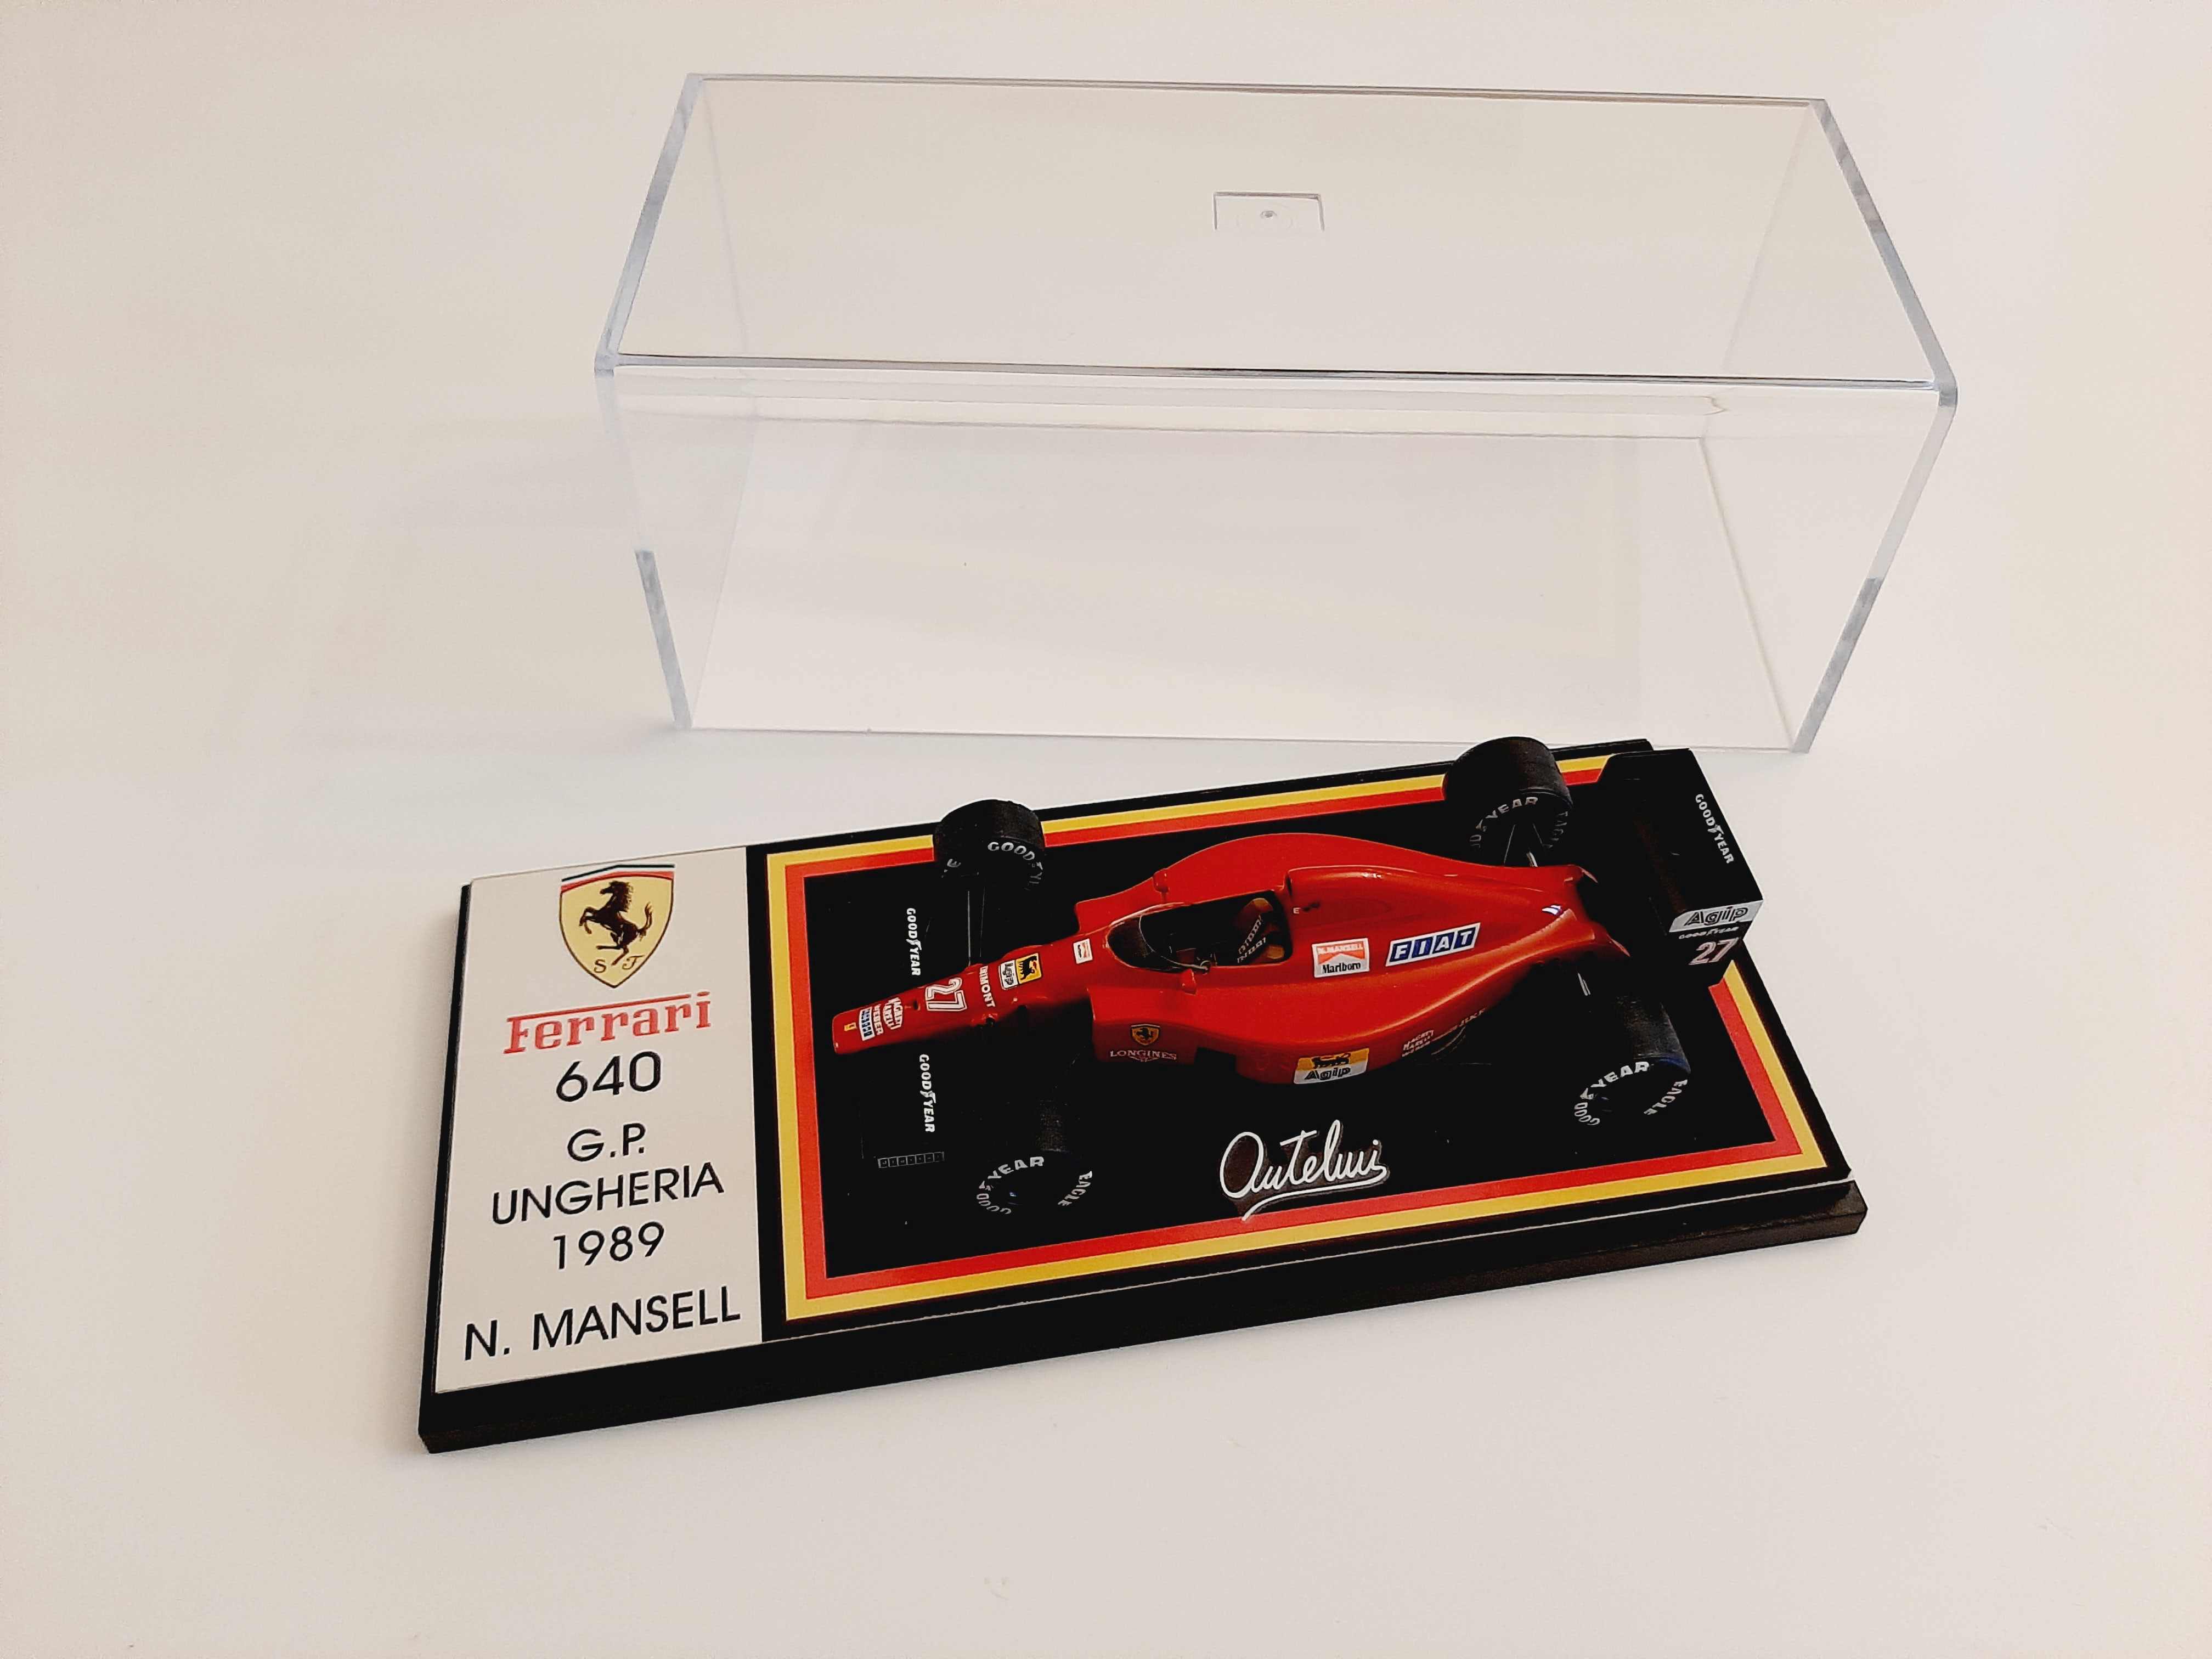 Antelmi : Ferrari 640 F1 Winner Hungary GP 1989